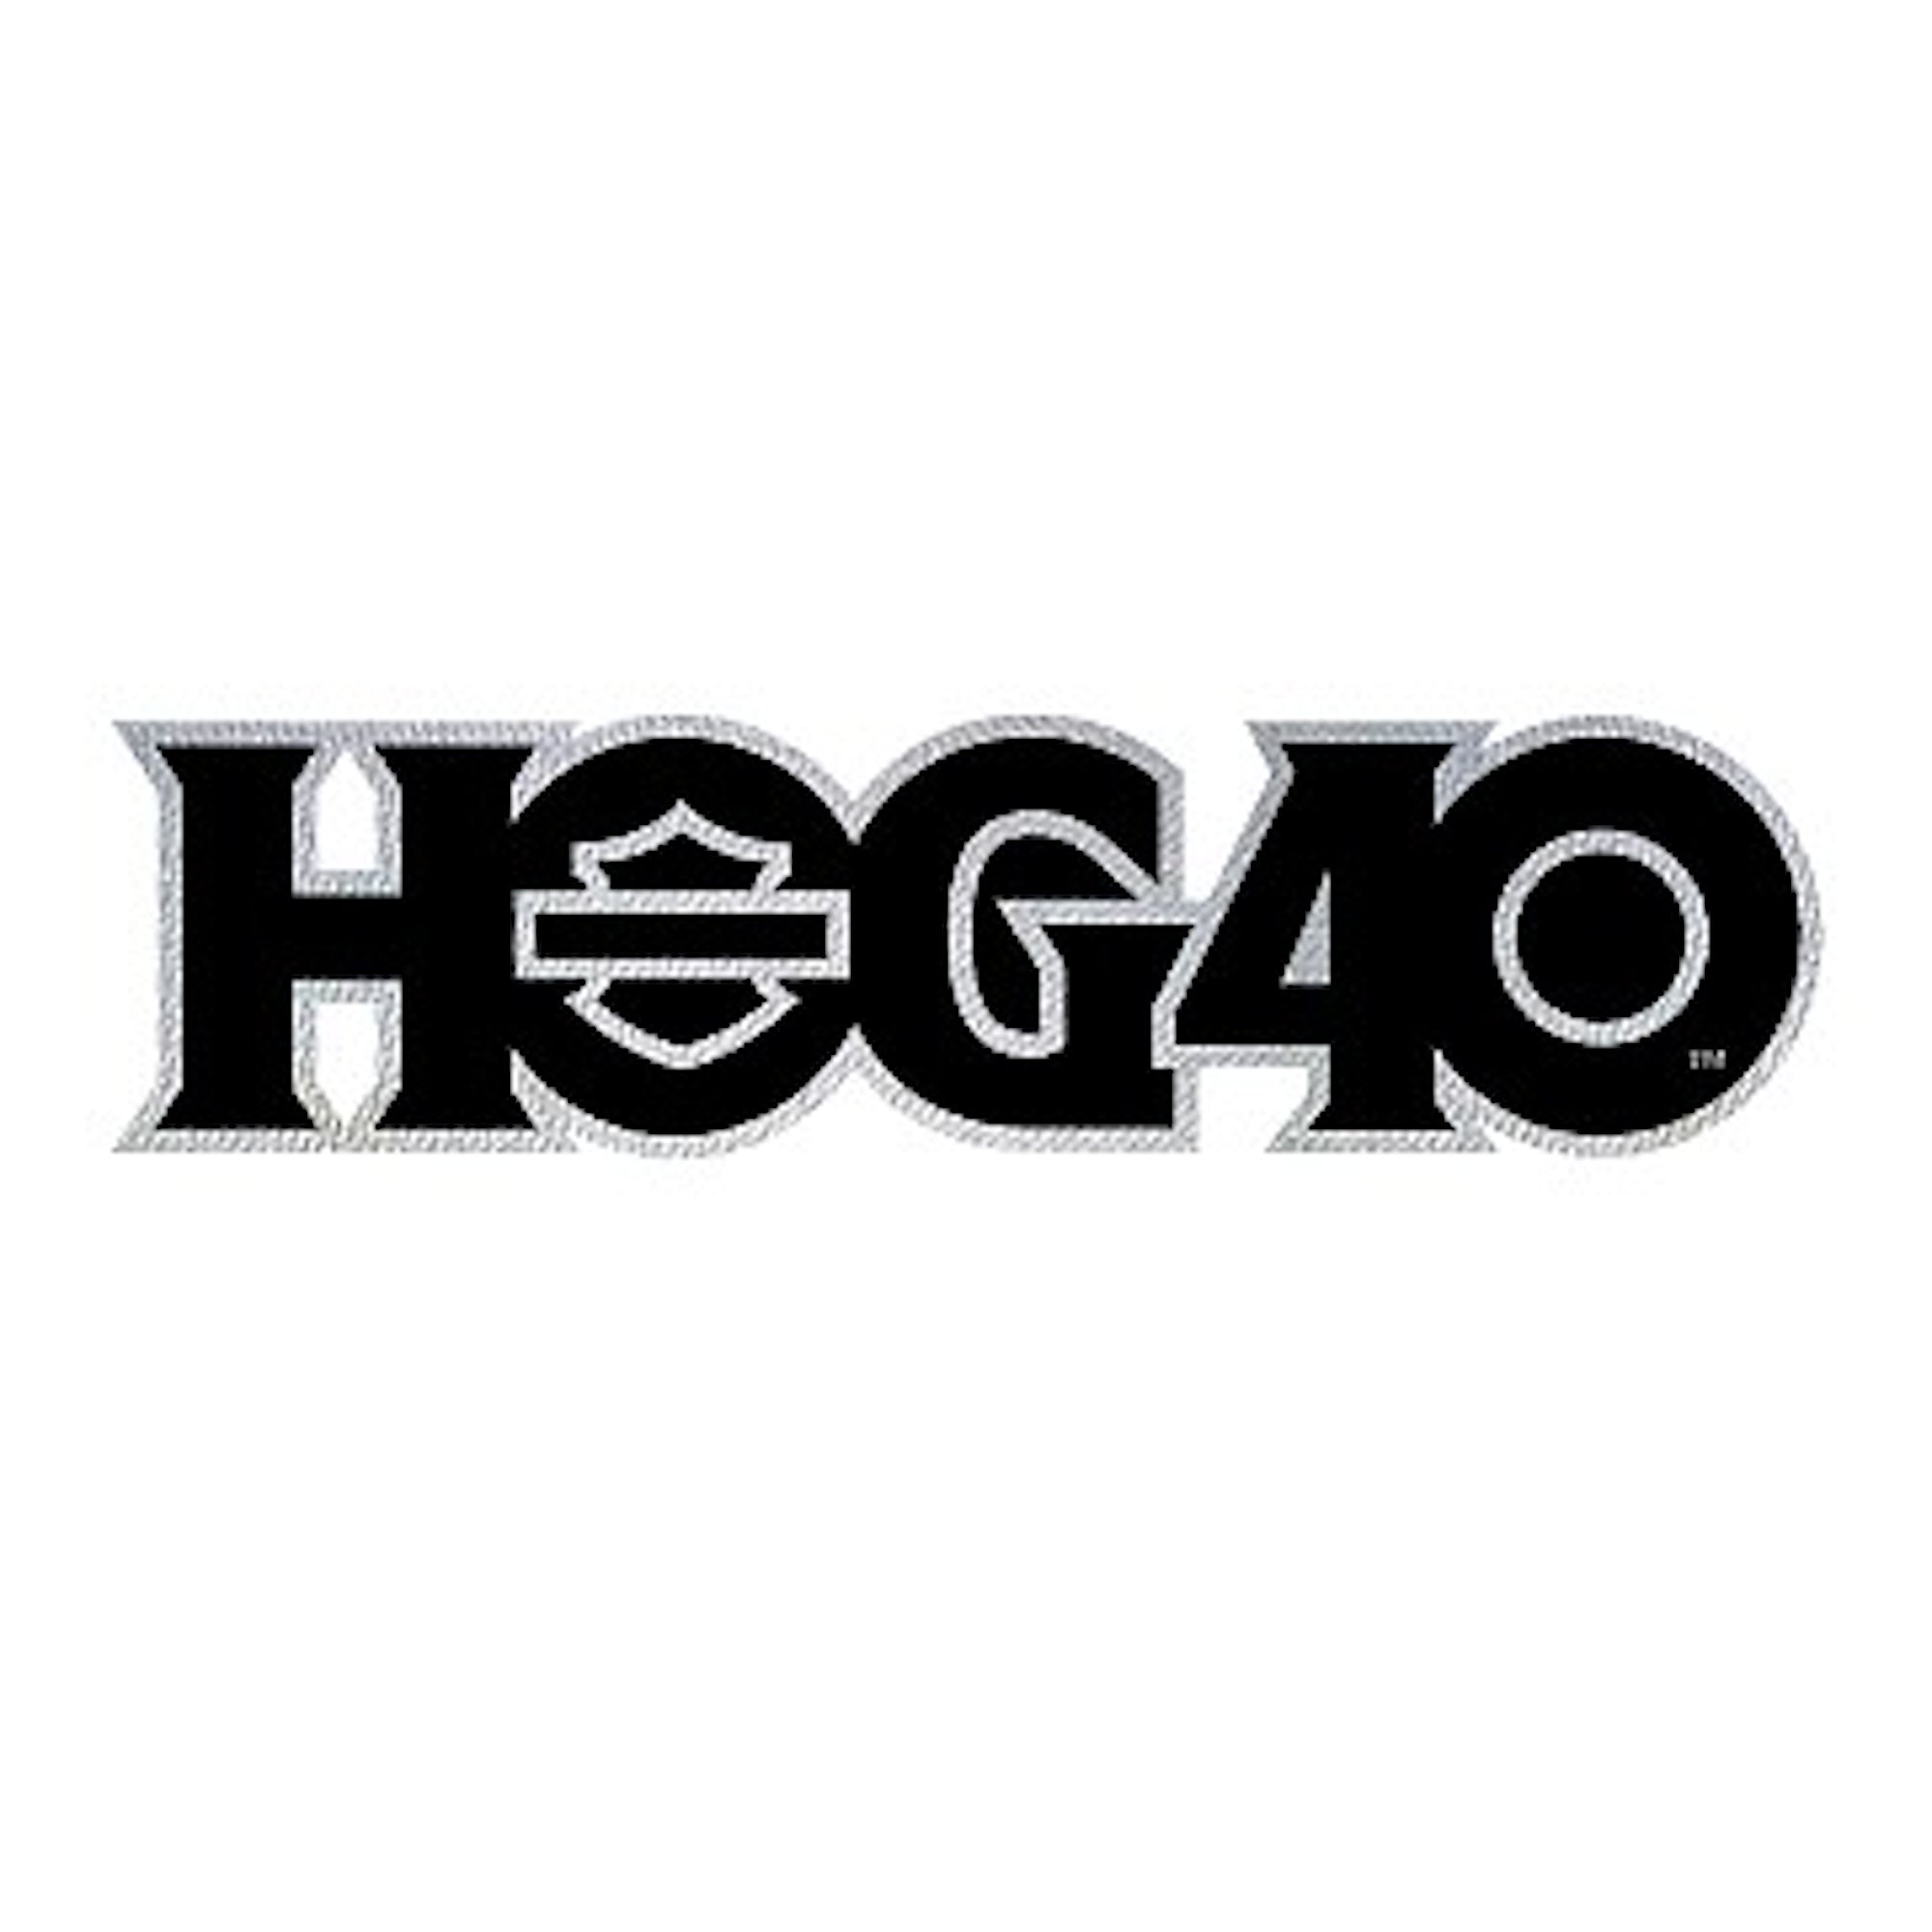 H.O.G40 Logo Patch - Large